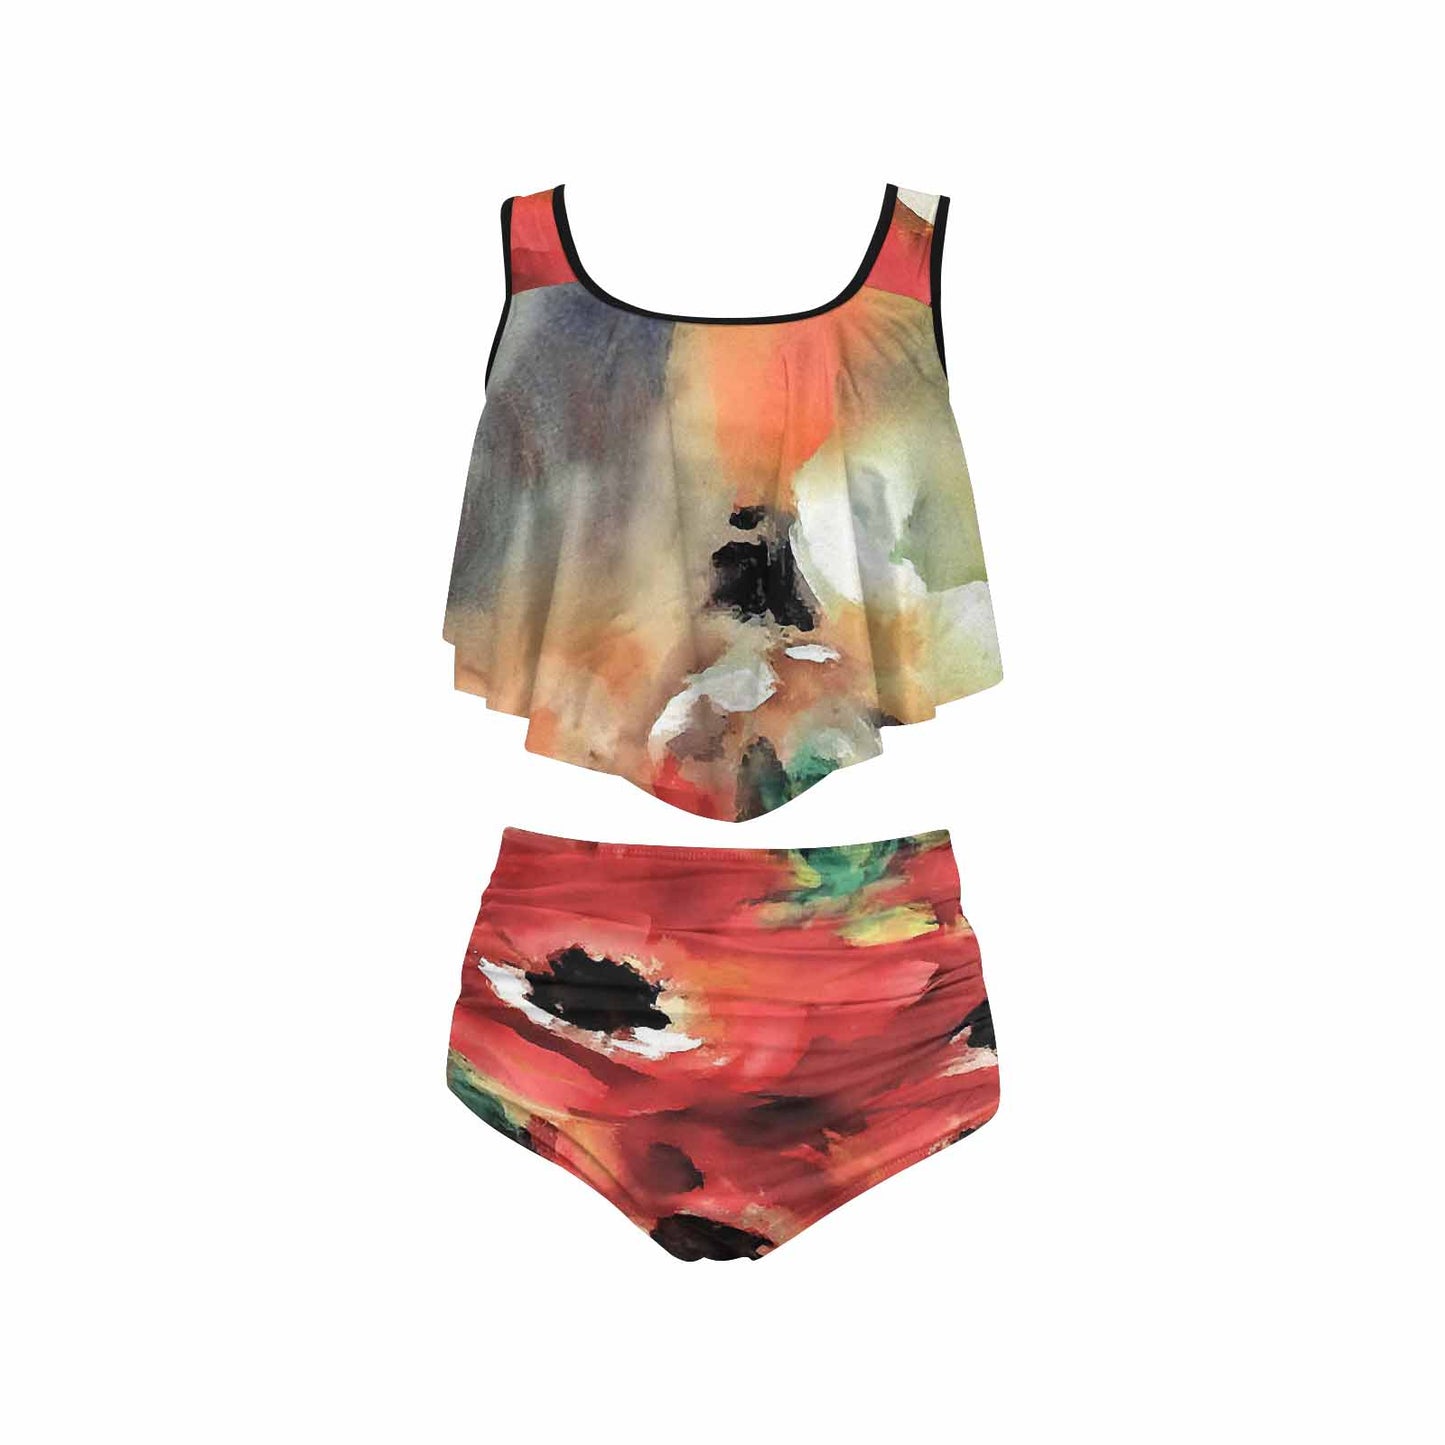 Vintage floral high waisted flounce top bikini, swim wear, Design 14